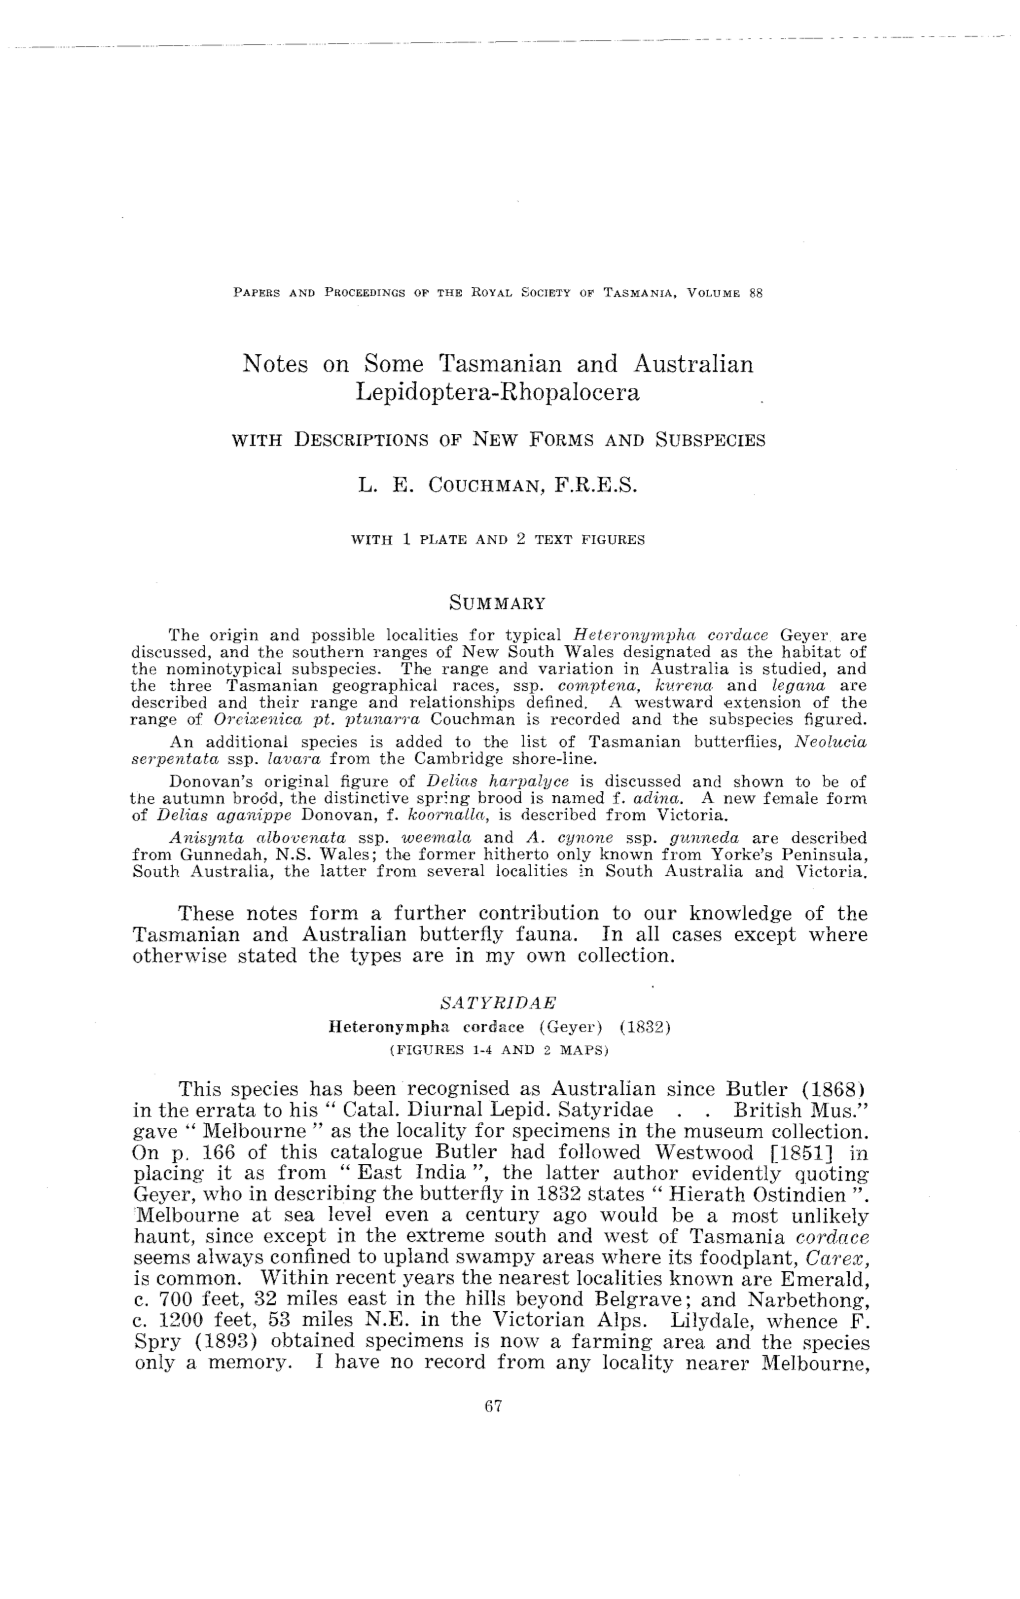 Notes on Some Tasmanian and Australian Lepidoptera-Rhopalocera